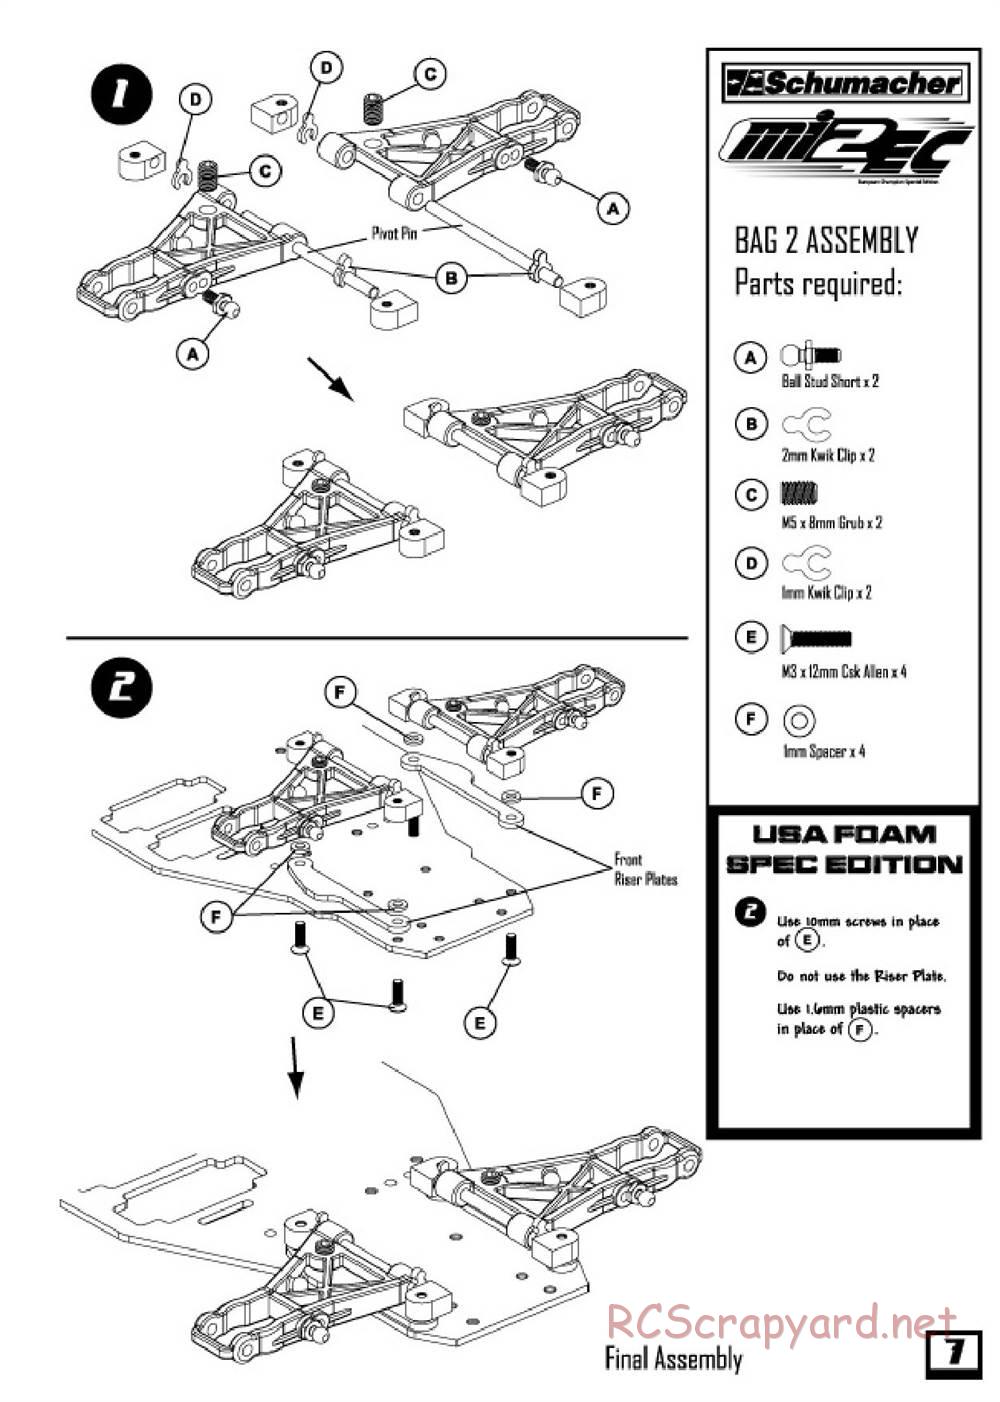 Schumacher - Mi2 EC - Manual - Page 9